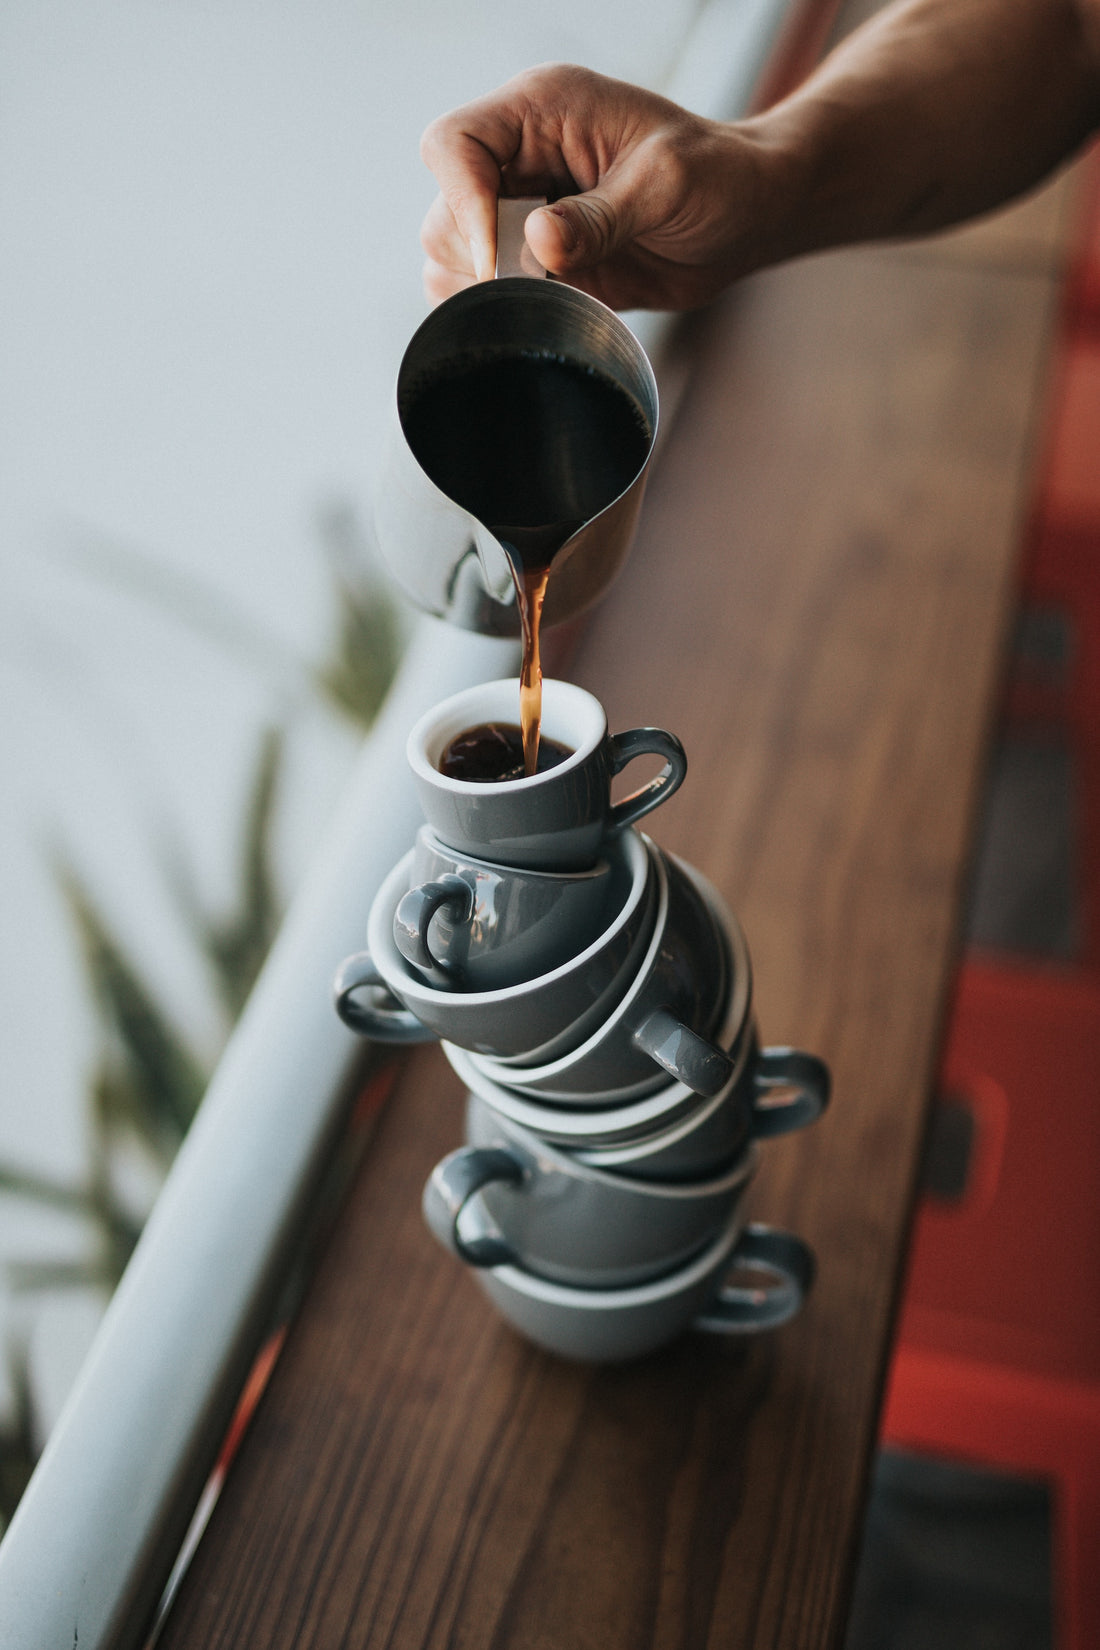 Understanding the effects of caffeine in coffee